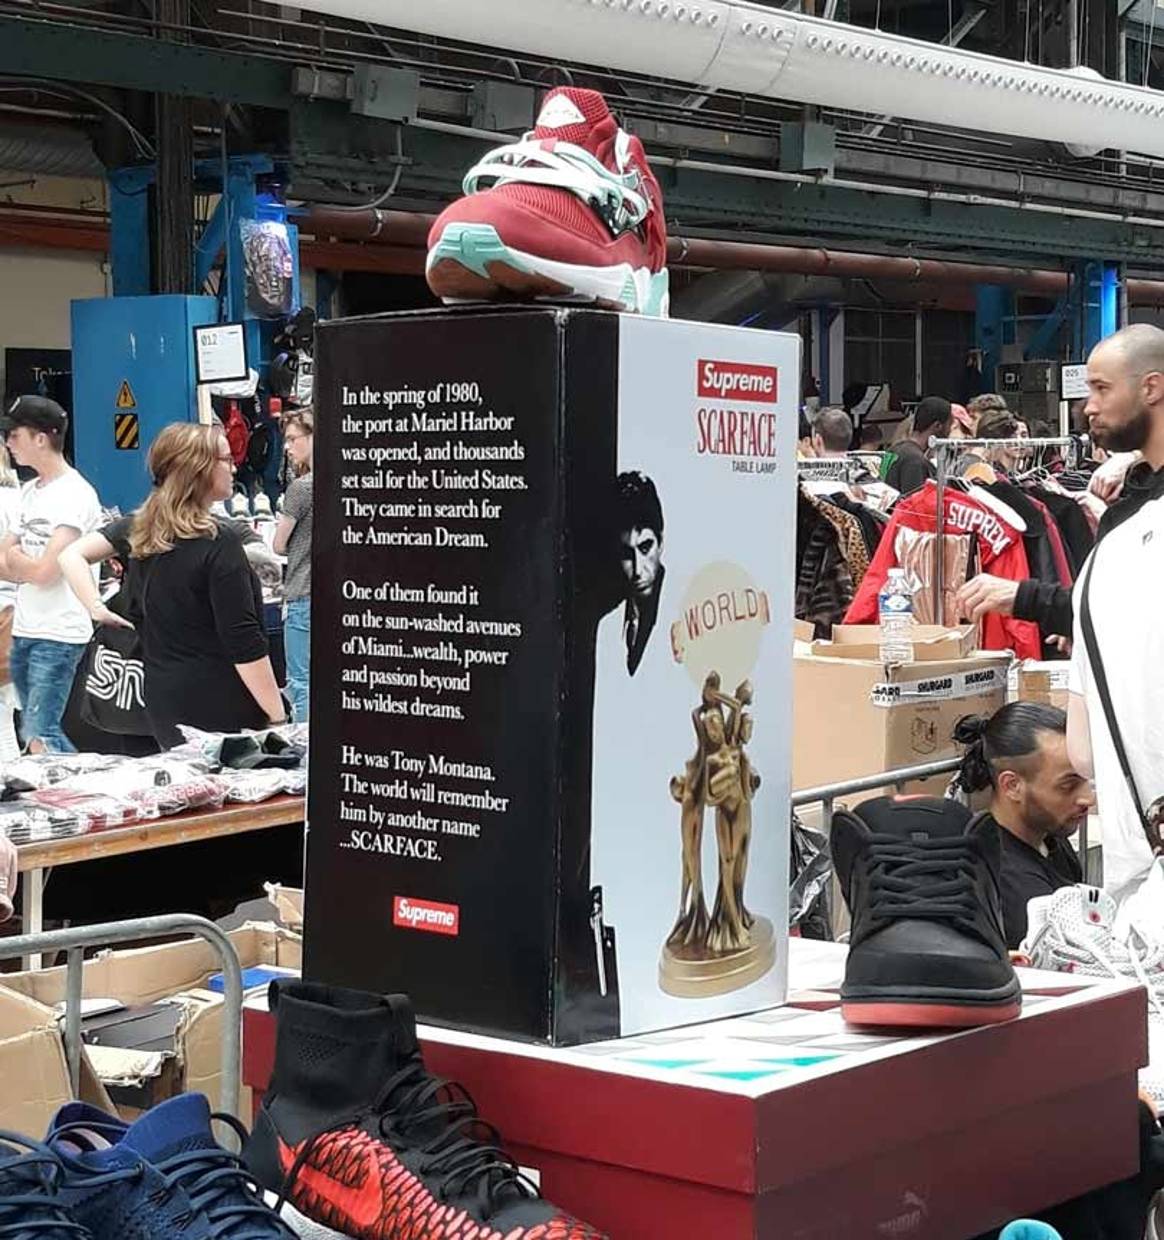 Kijken: Sneakerness Amsterdam viert ‘customizing’ in 2018